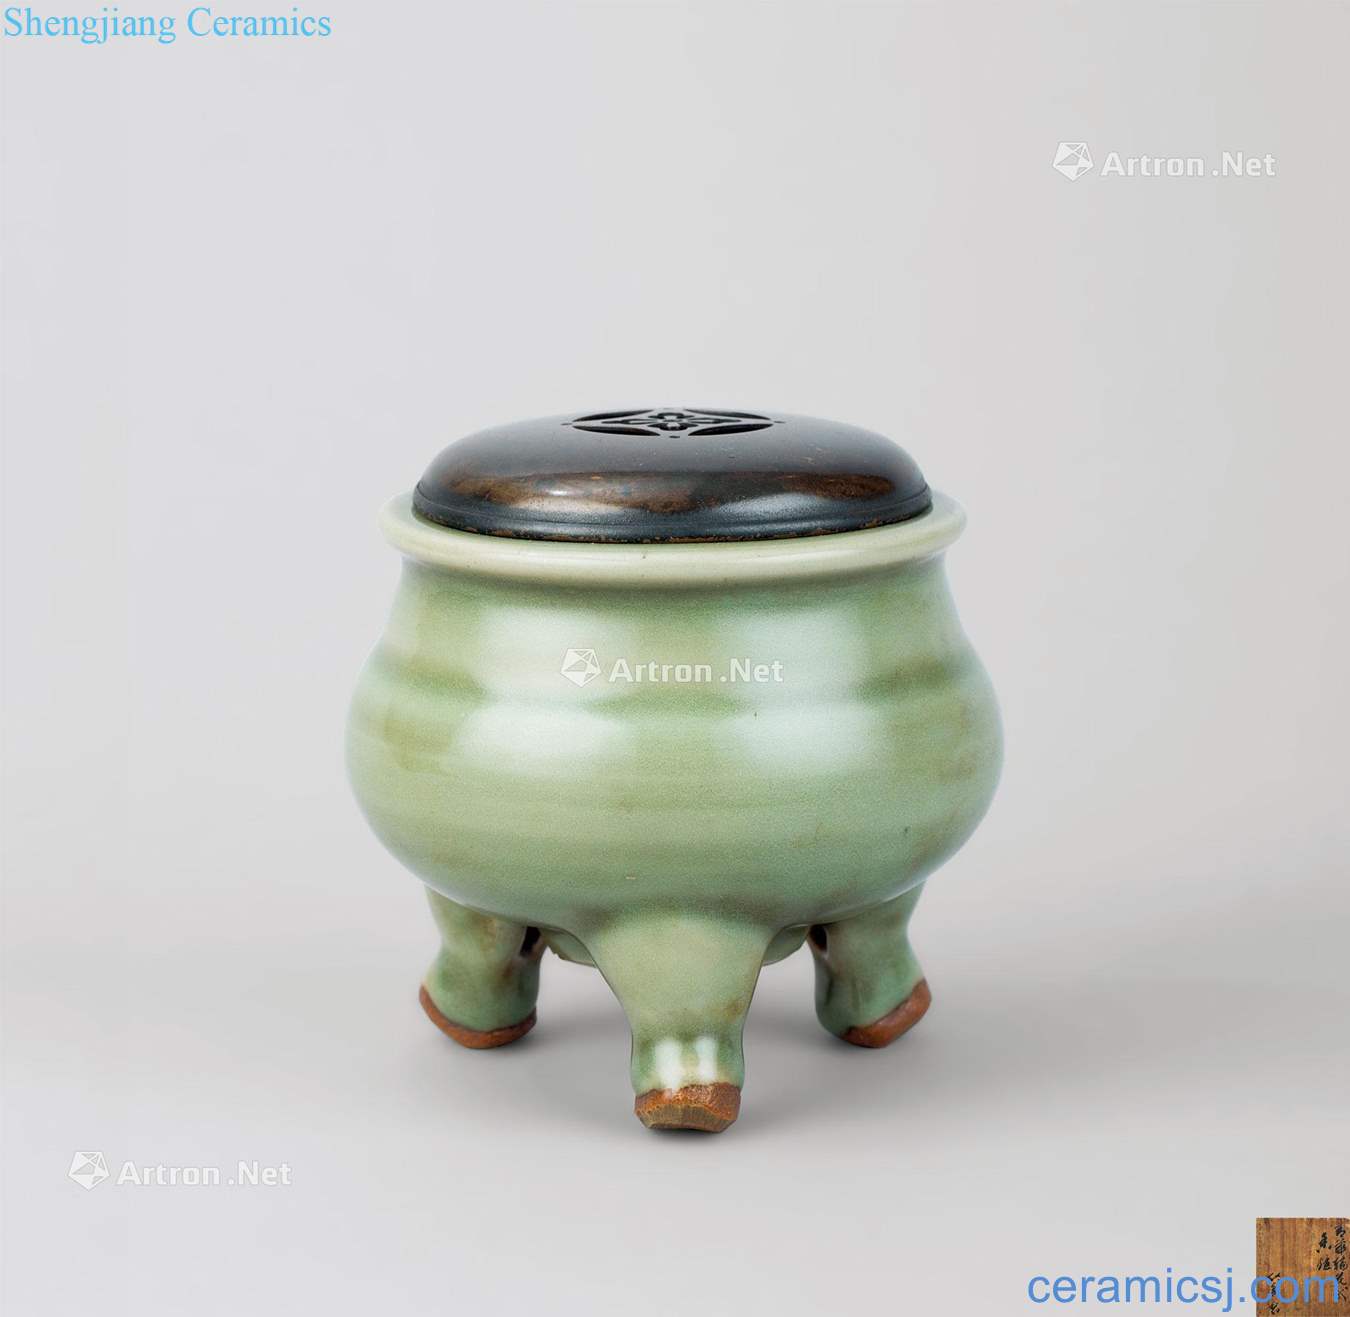 In the Ming dynasty (1368-1644), longquan celadon celadon three-legged incense burner